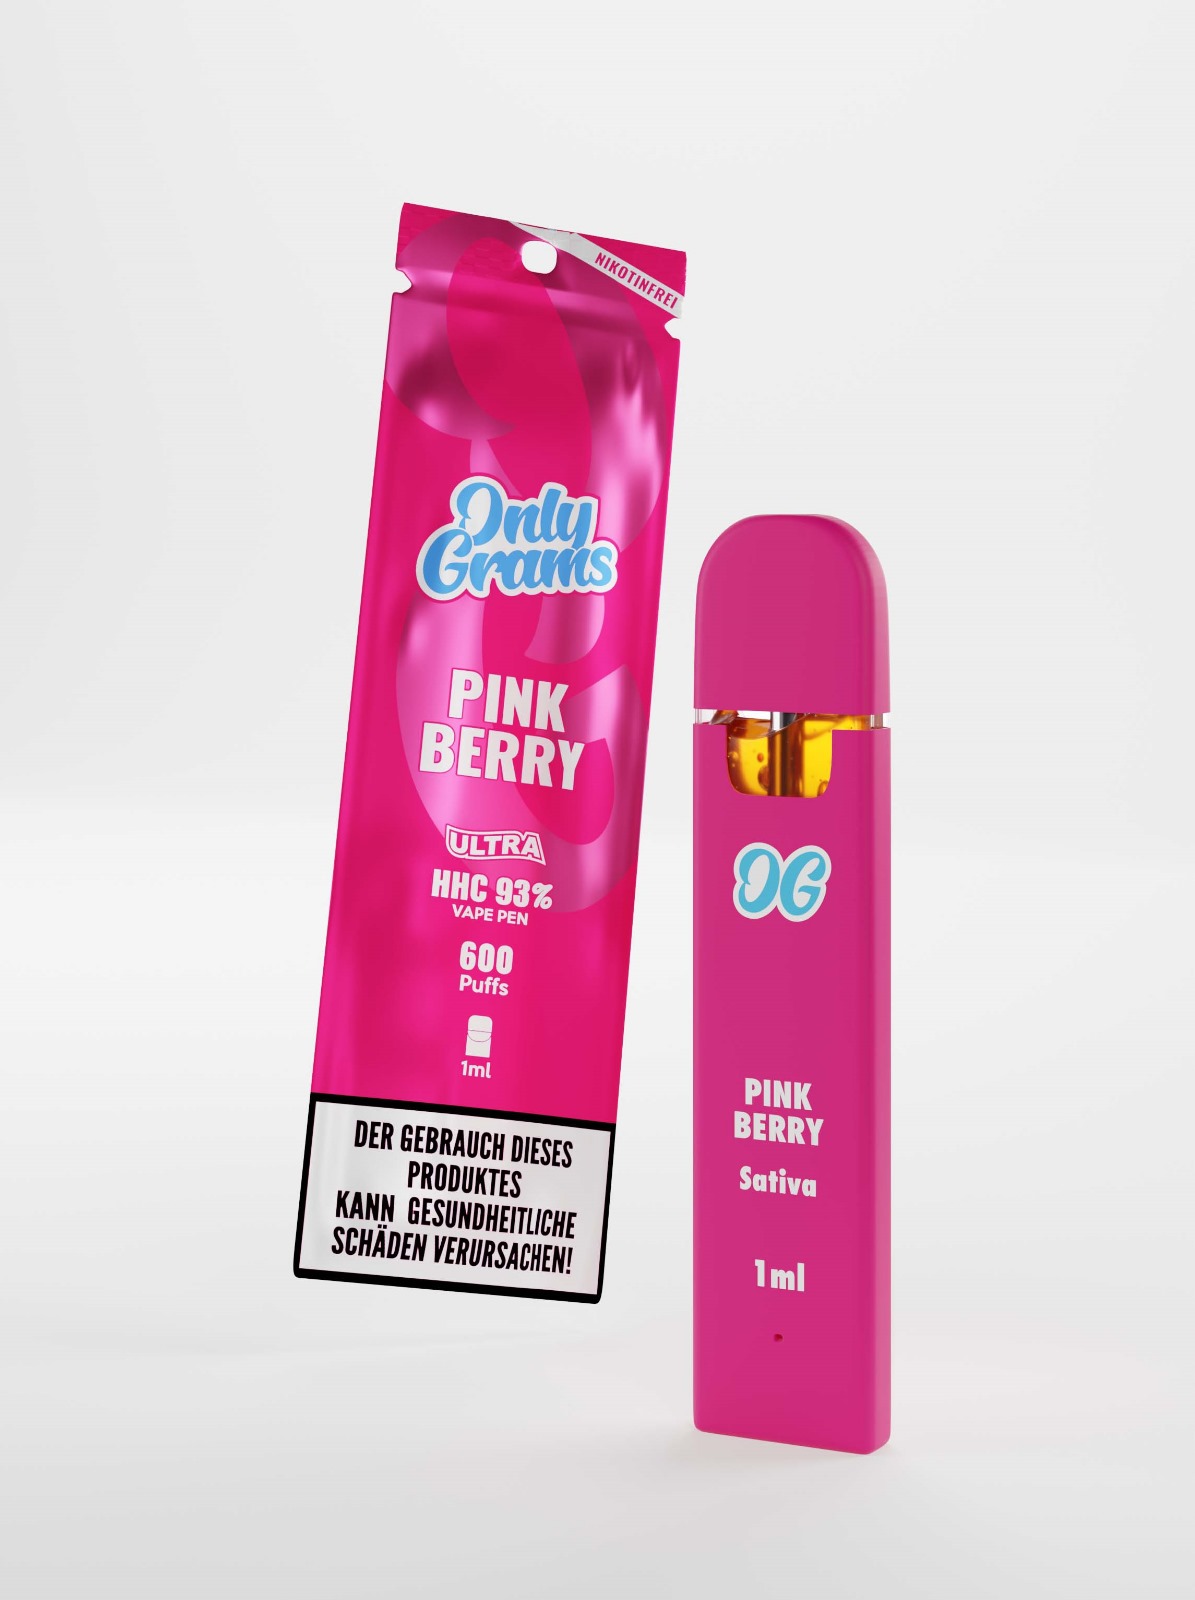 Only Grams - Pink Berry (Sativa) - 93% HHC 1 ml Disposable Vape Pen